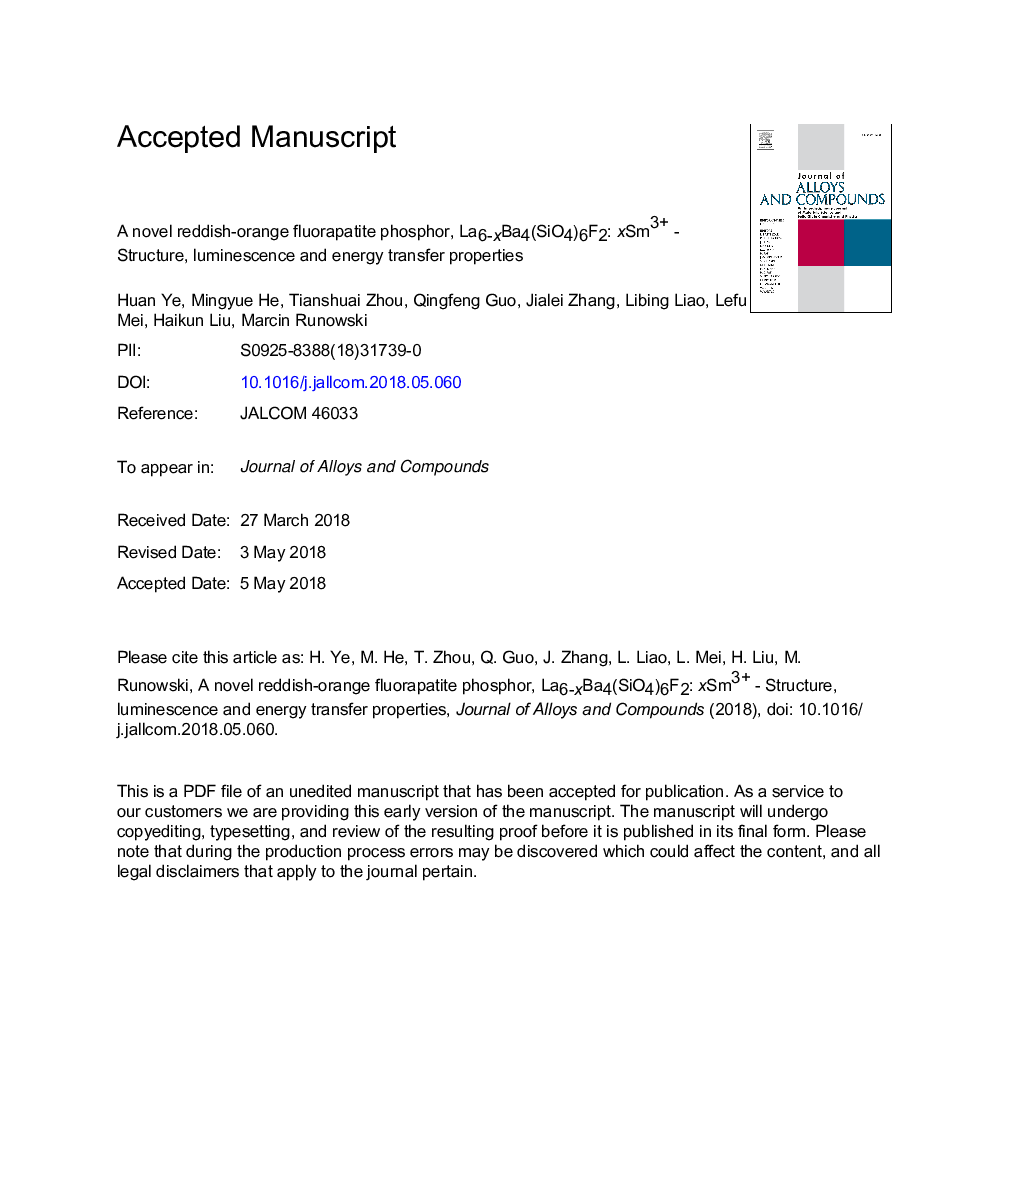 A novel reddish-orange fluorapatite phosphor, La6-xBa4(SiO4)6F2: xSm3+ - Structure, luminescence and energy transfer properties